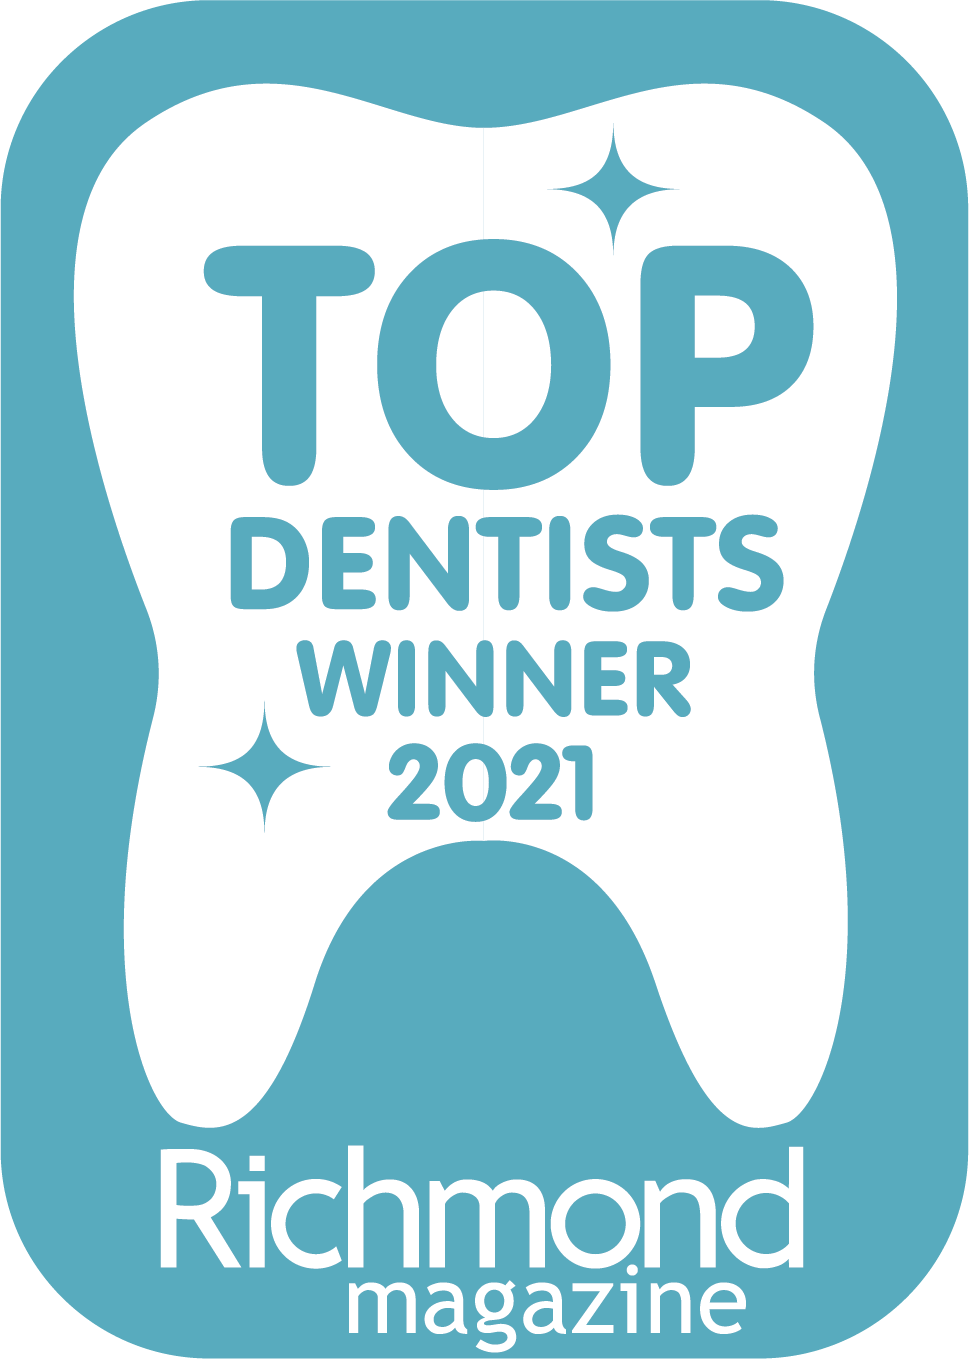 Top Dentists 2021 Winner